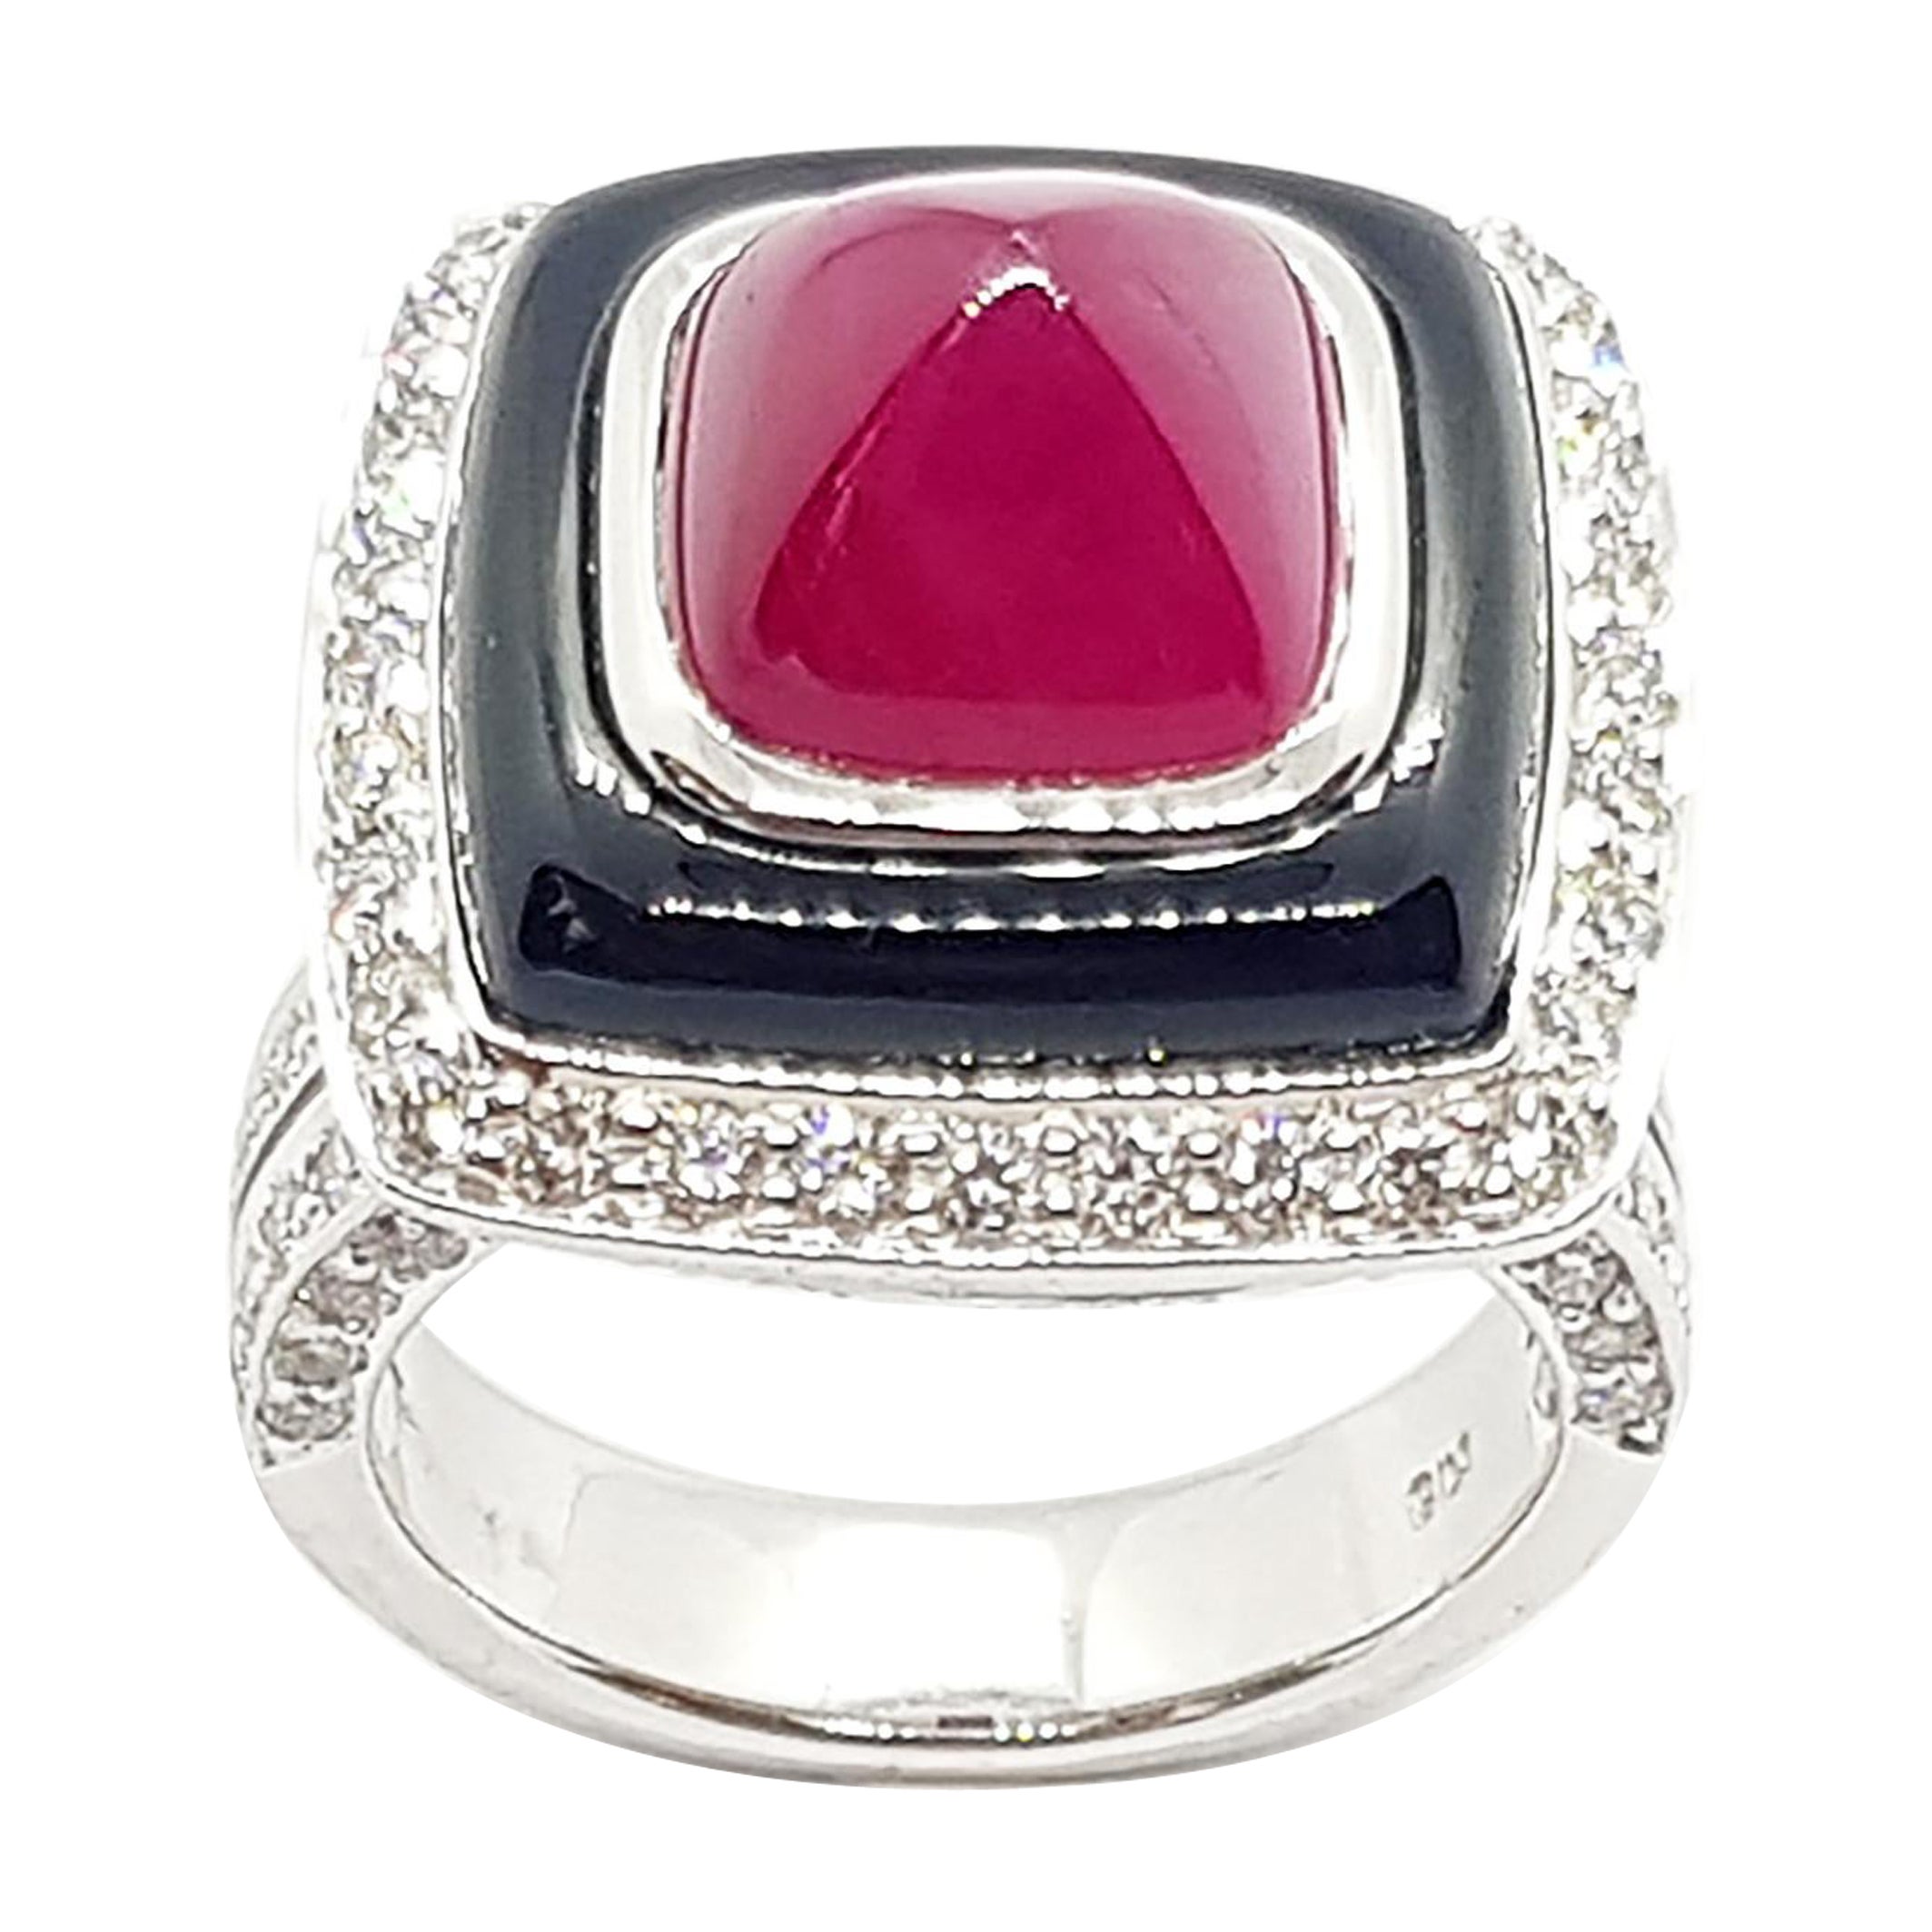 Sugarloaf Cut Ruby, Onyx and Diamond Ring Set in 18 Karat White Gold Settings